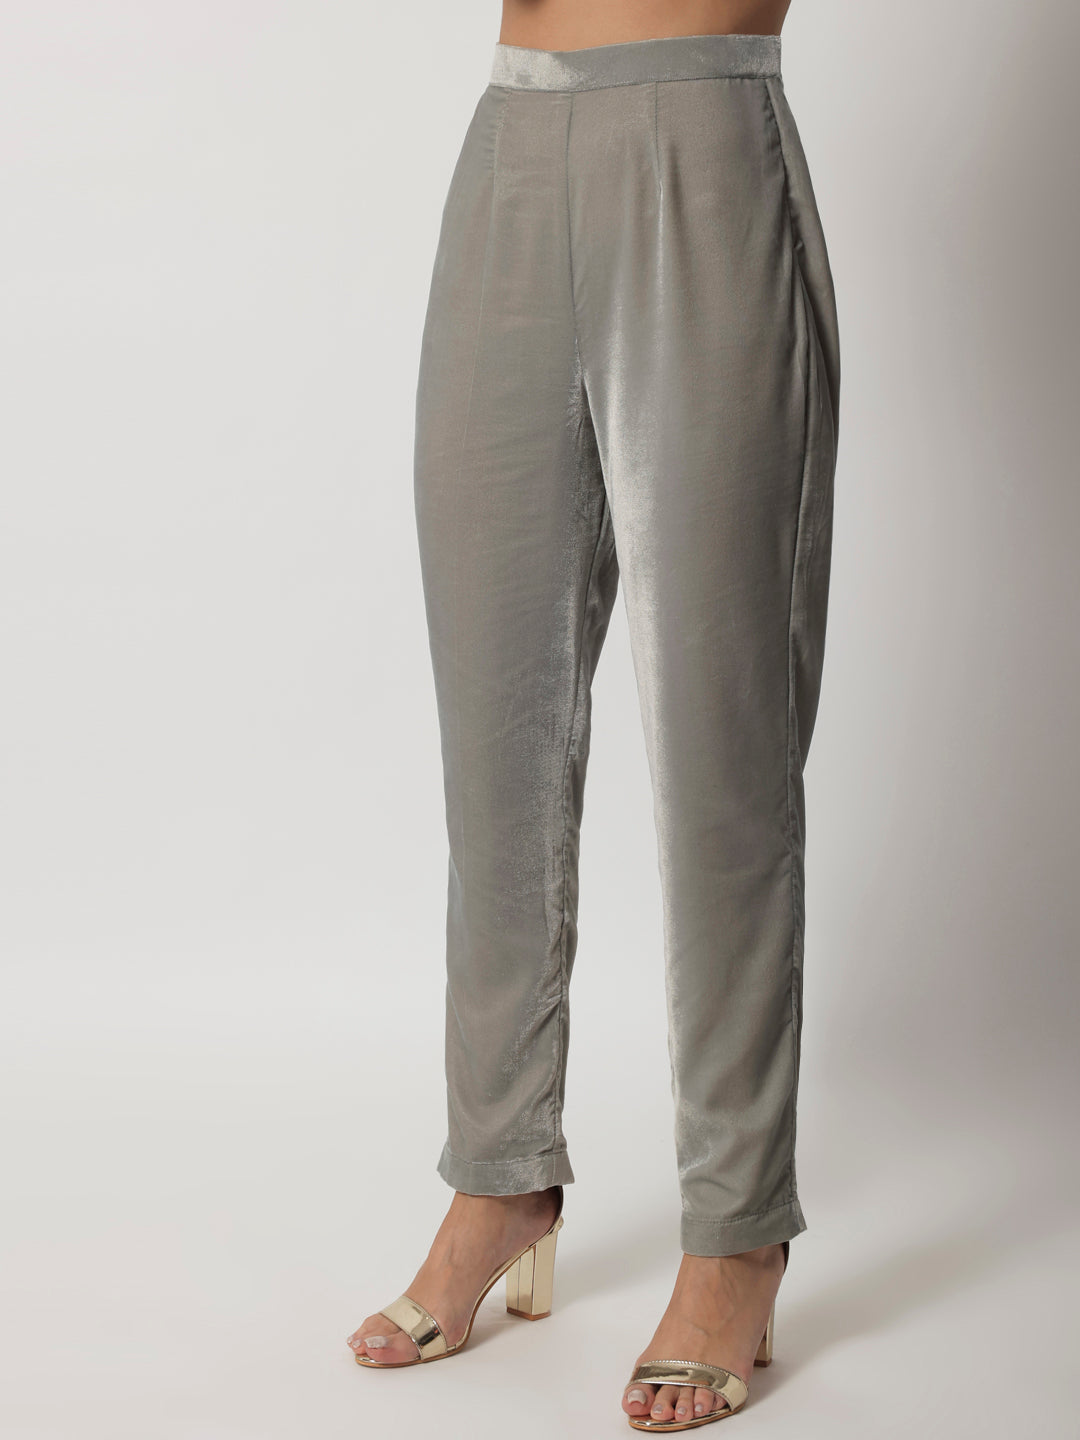 Women's Elegant Grey Straight Kurti With Straight Pants And Organza Dupatta - Anokherang